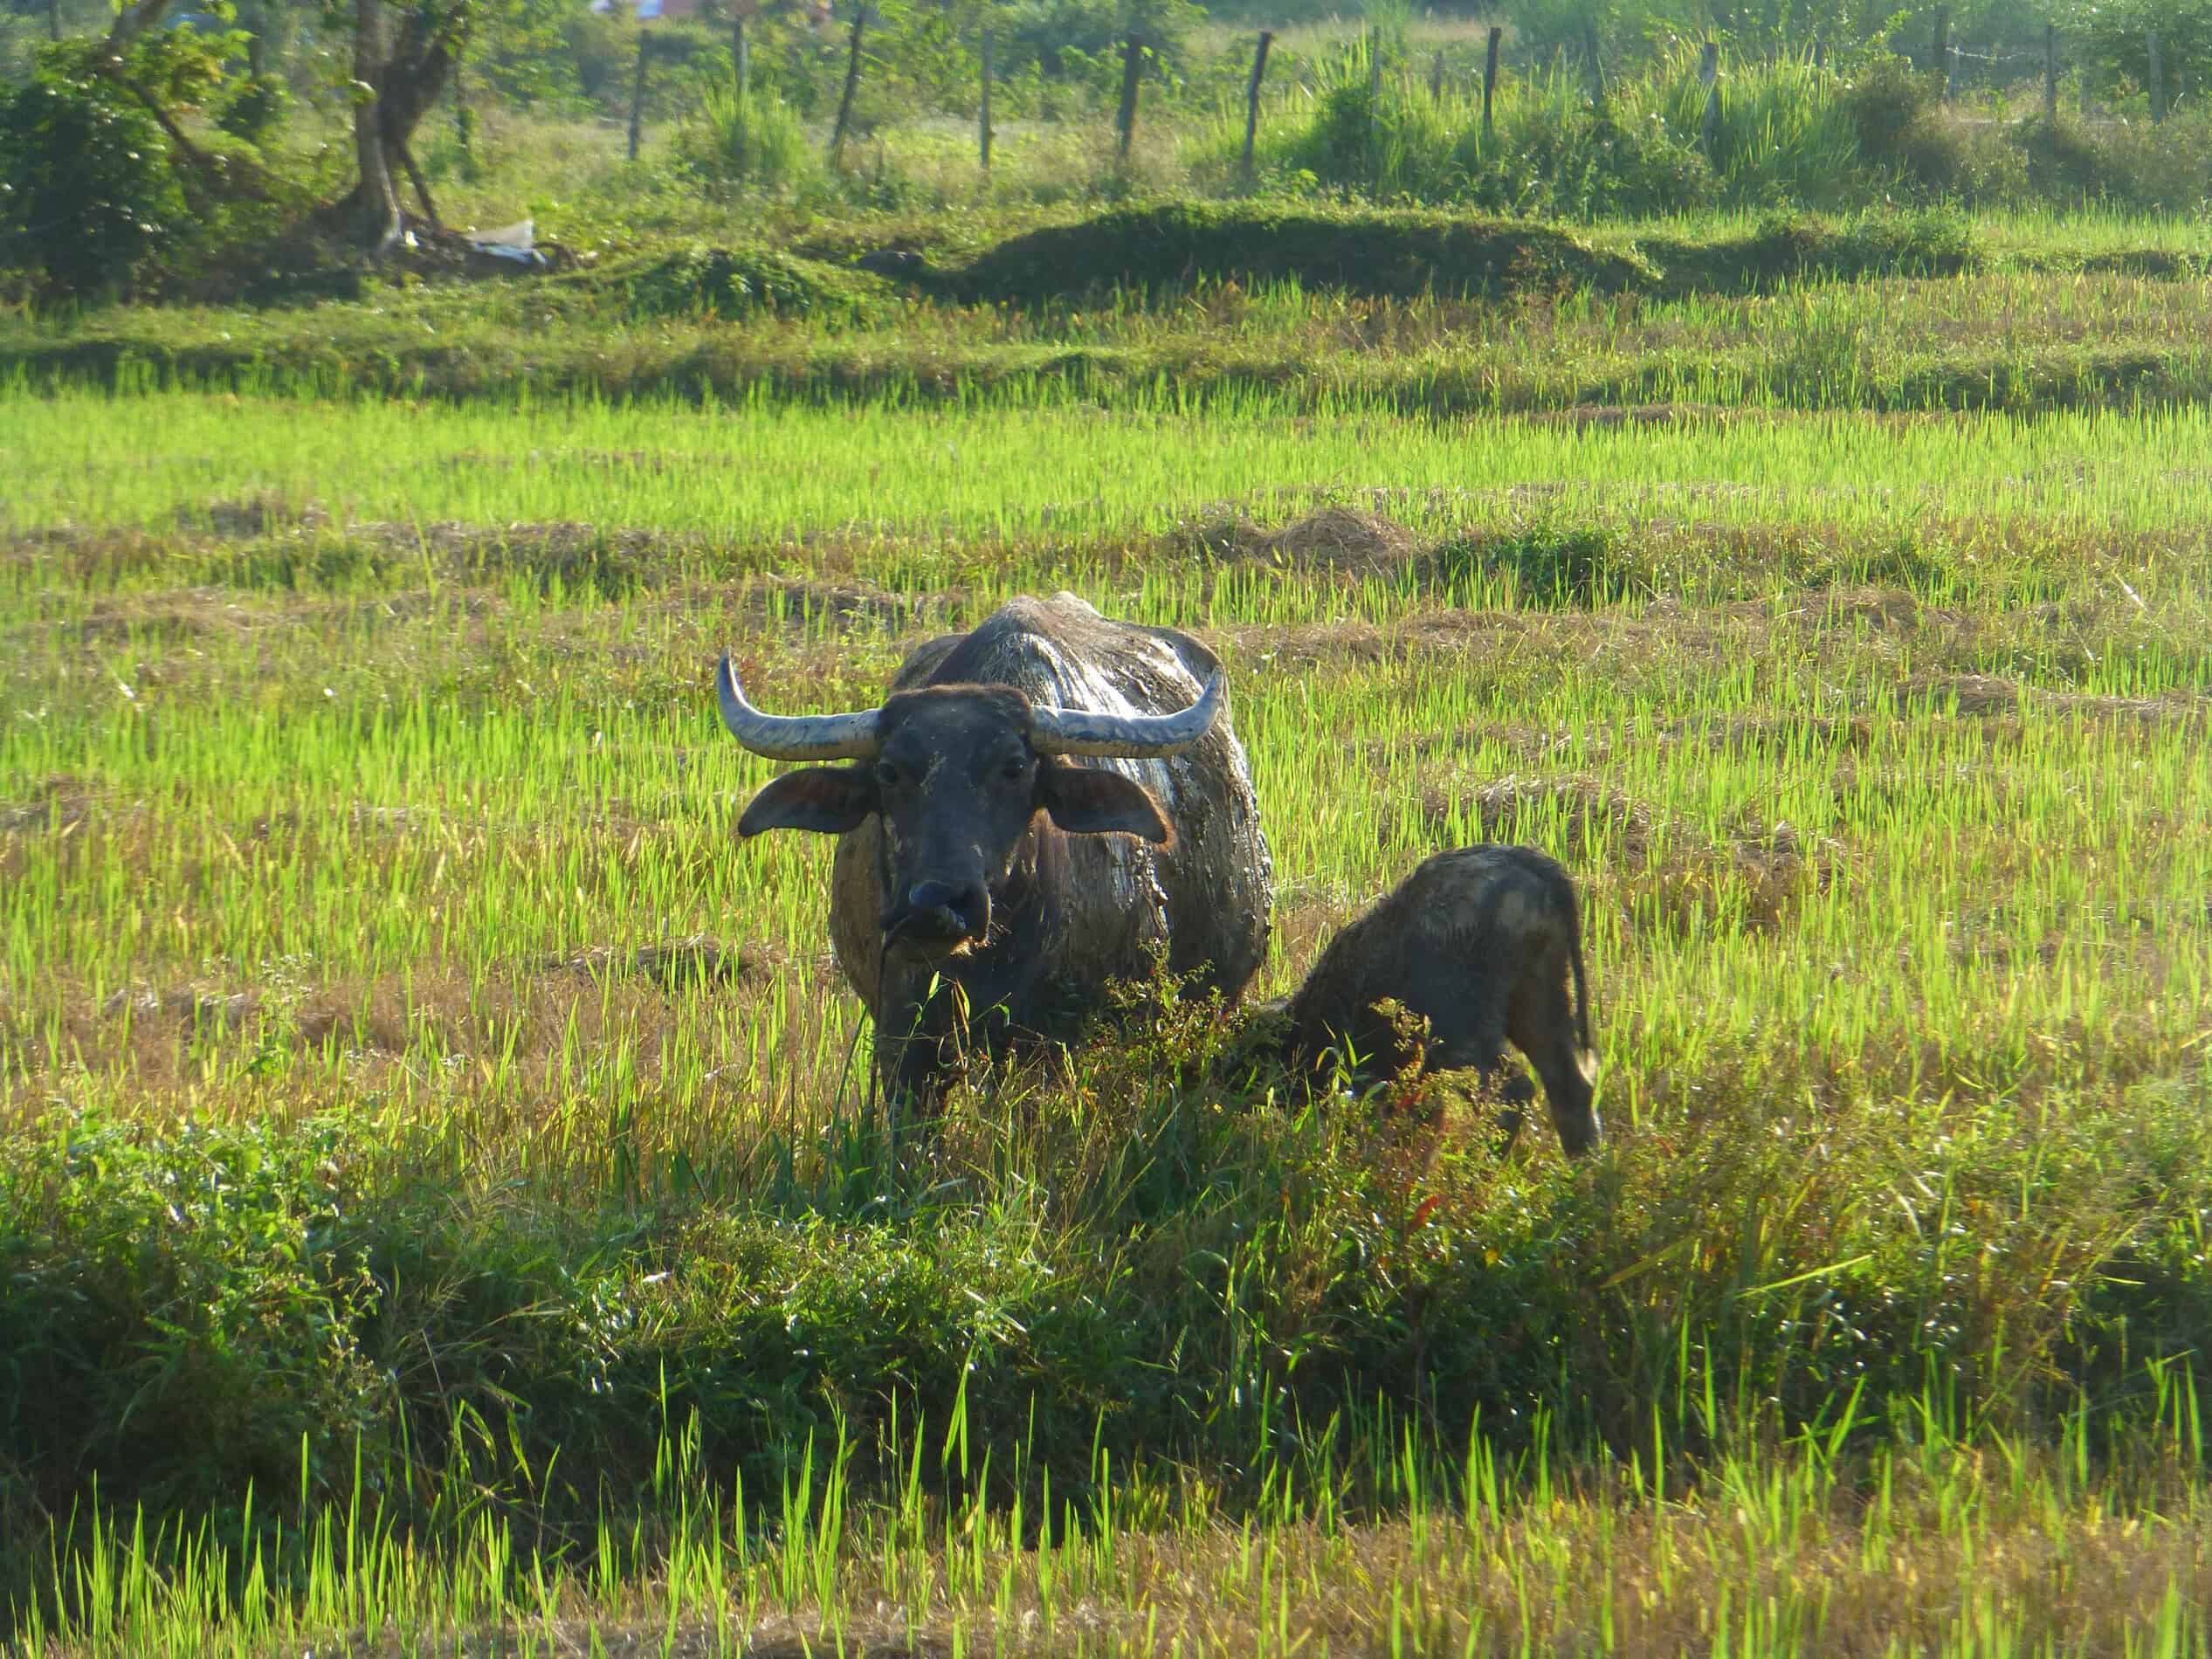 Sunset Valley - Buffalos in rice paddies